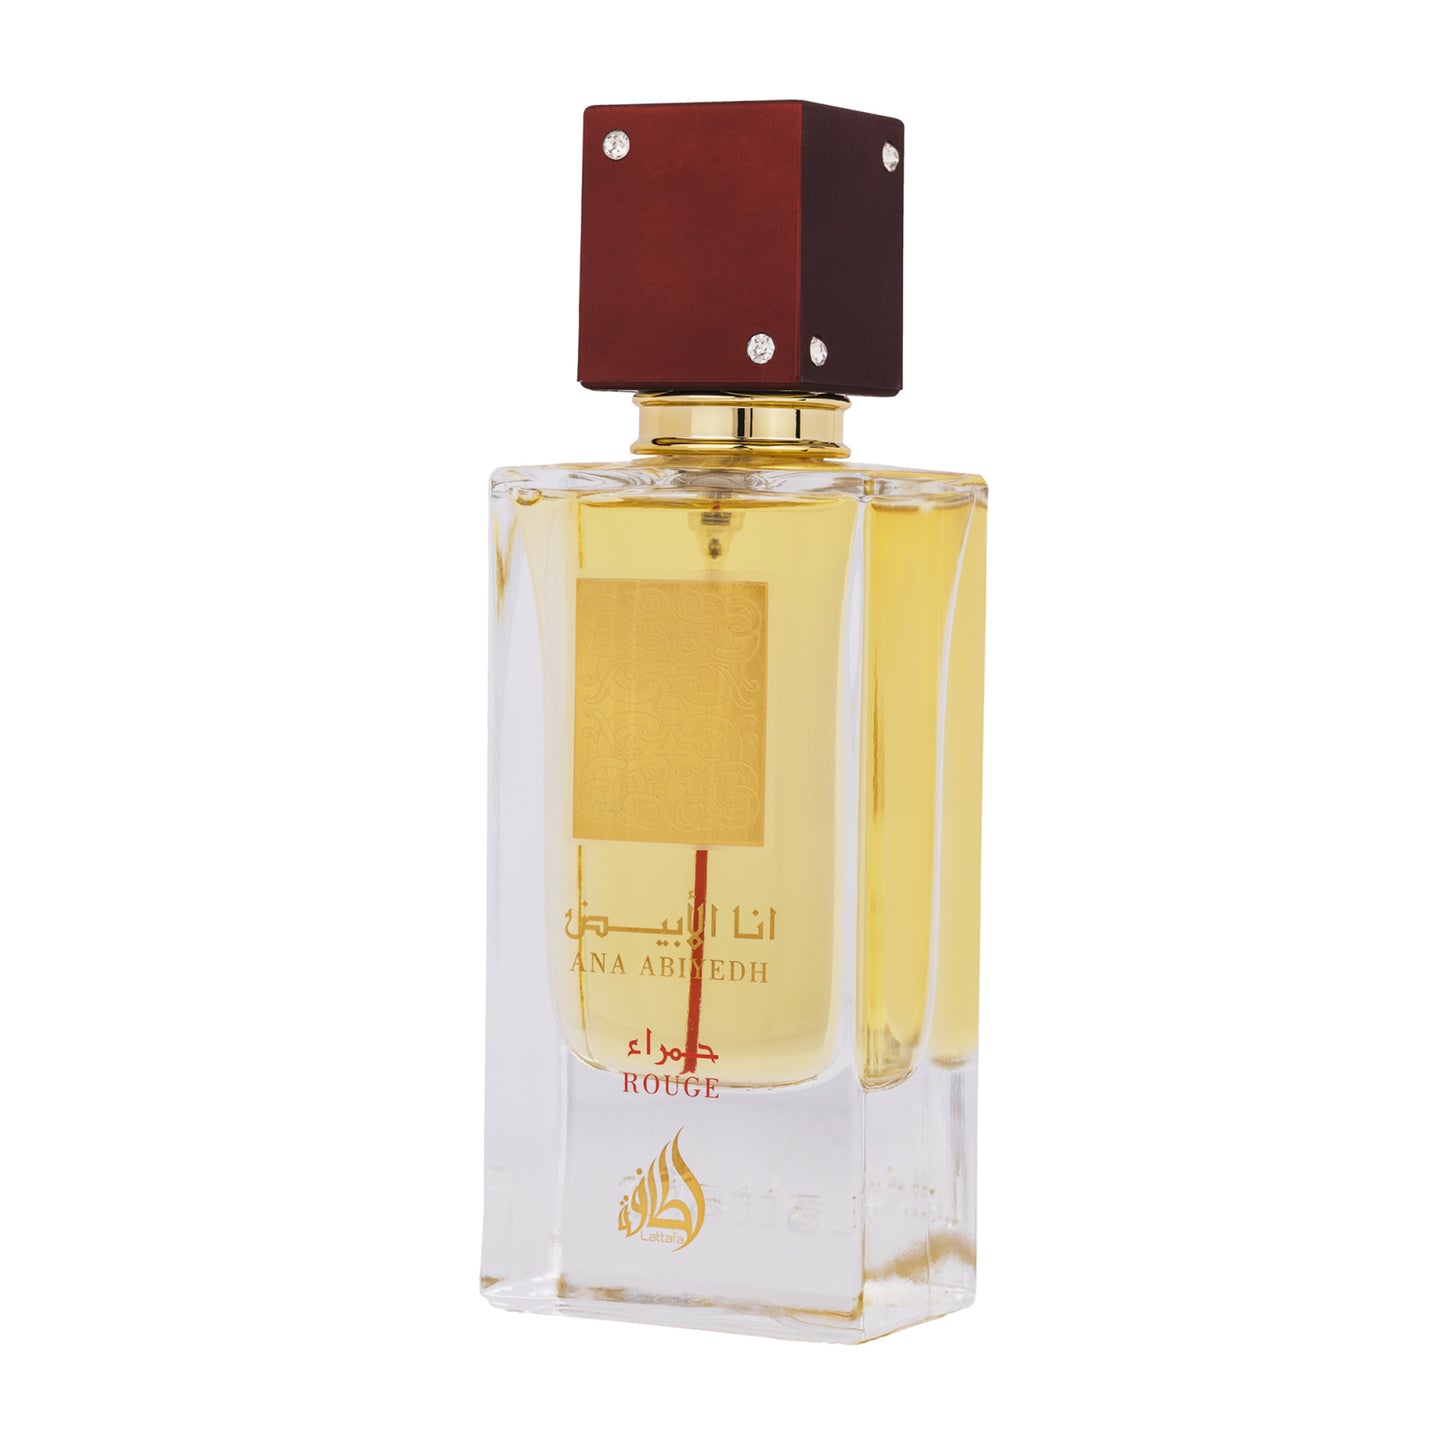 Parfum Ana Abiyedh Rouge, Lattafa, apa de parfum 60 ml, femei